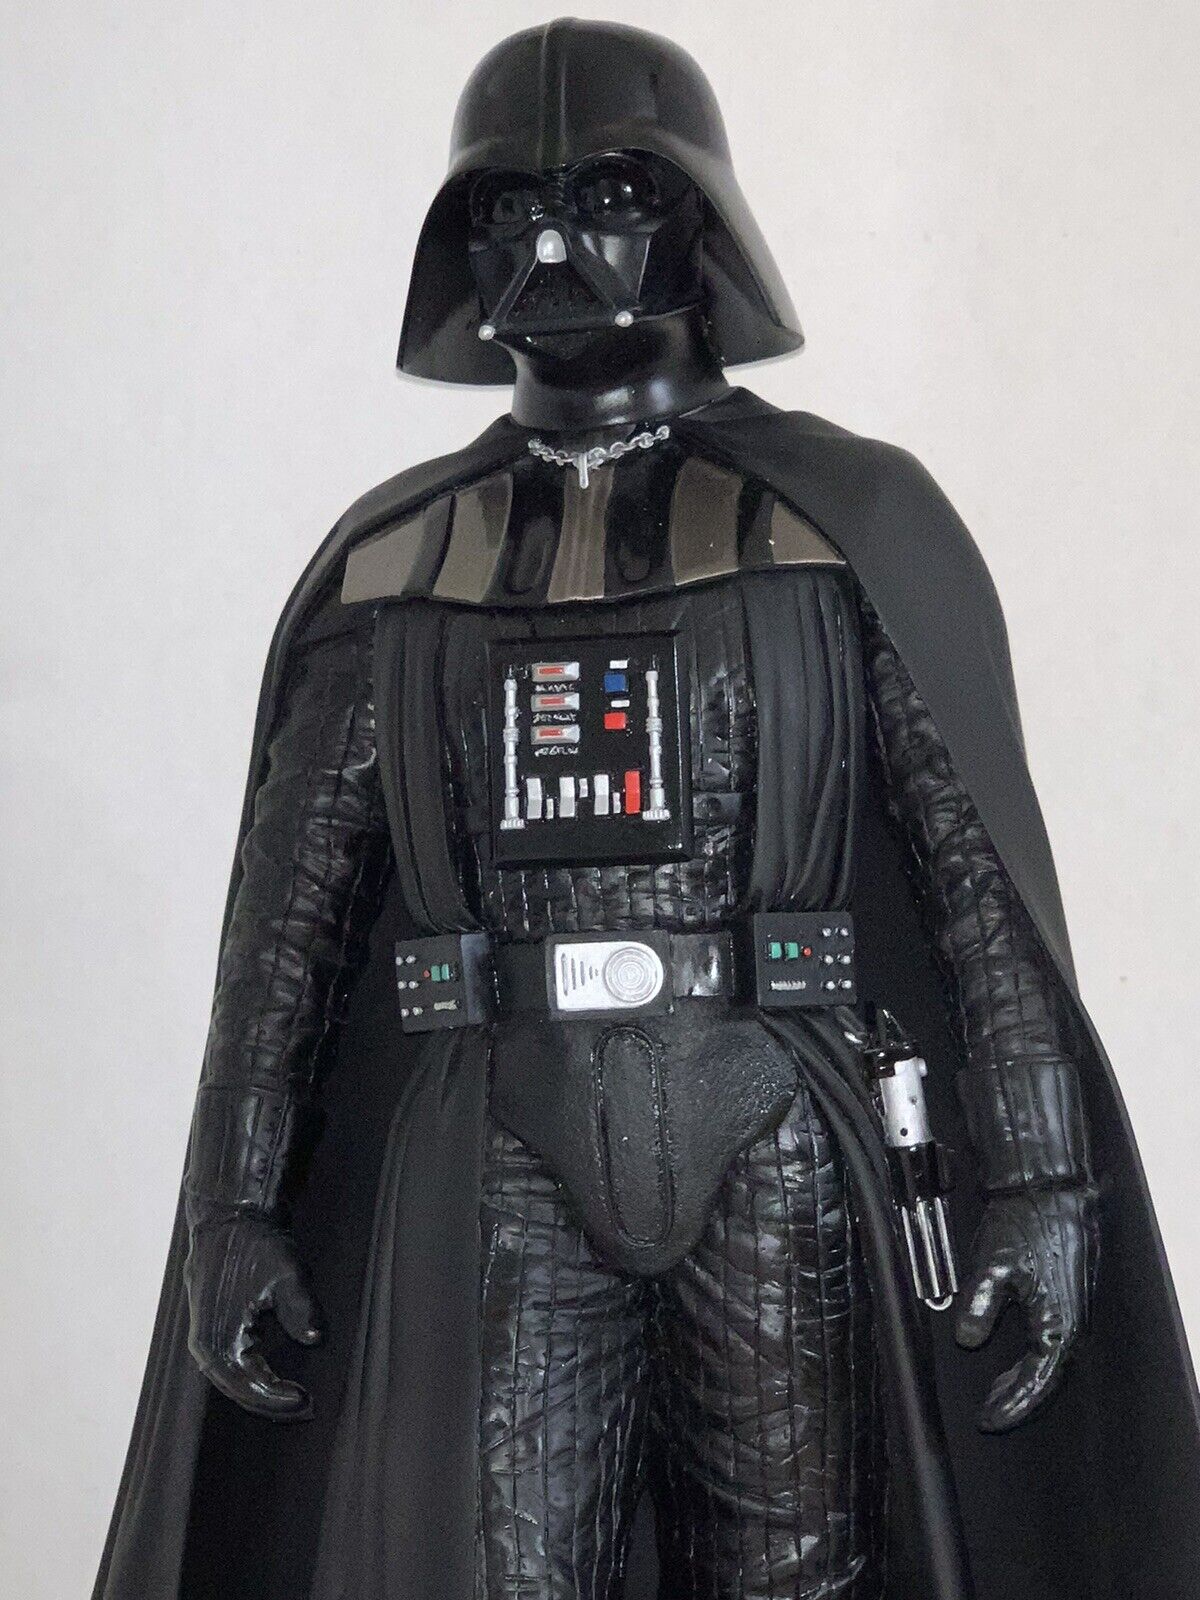 2001 Attakus Star Wars Statue - Darth Vader - Rare Limited Edition 1/1500 - NEW